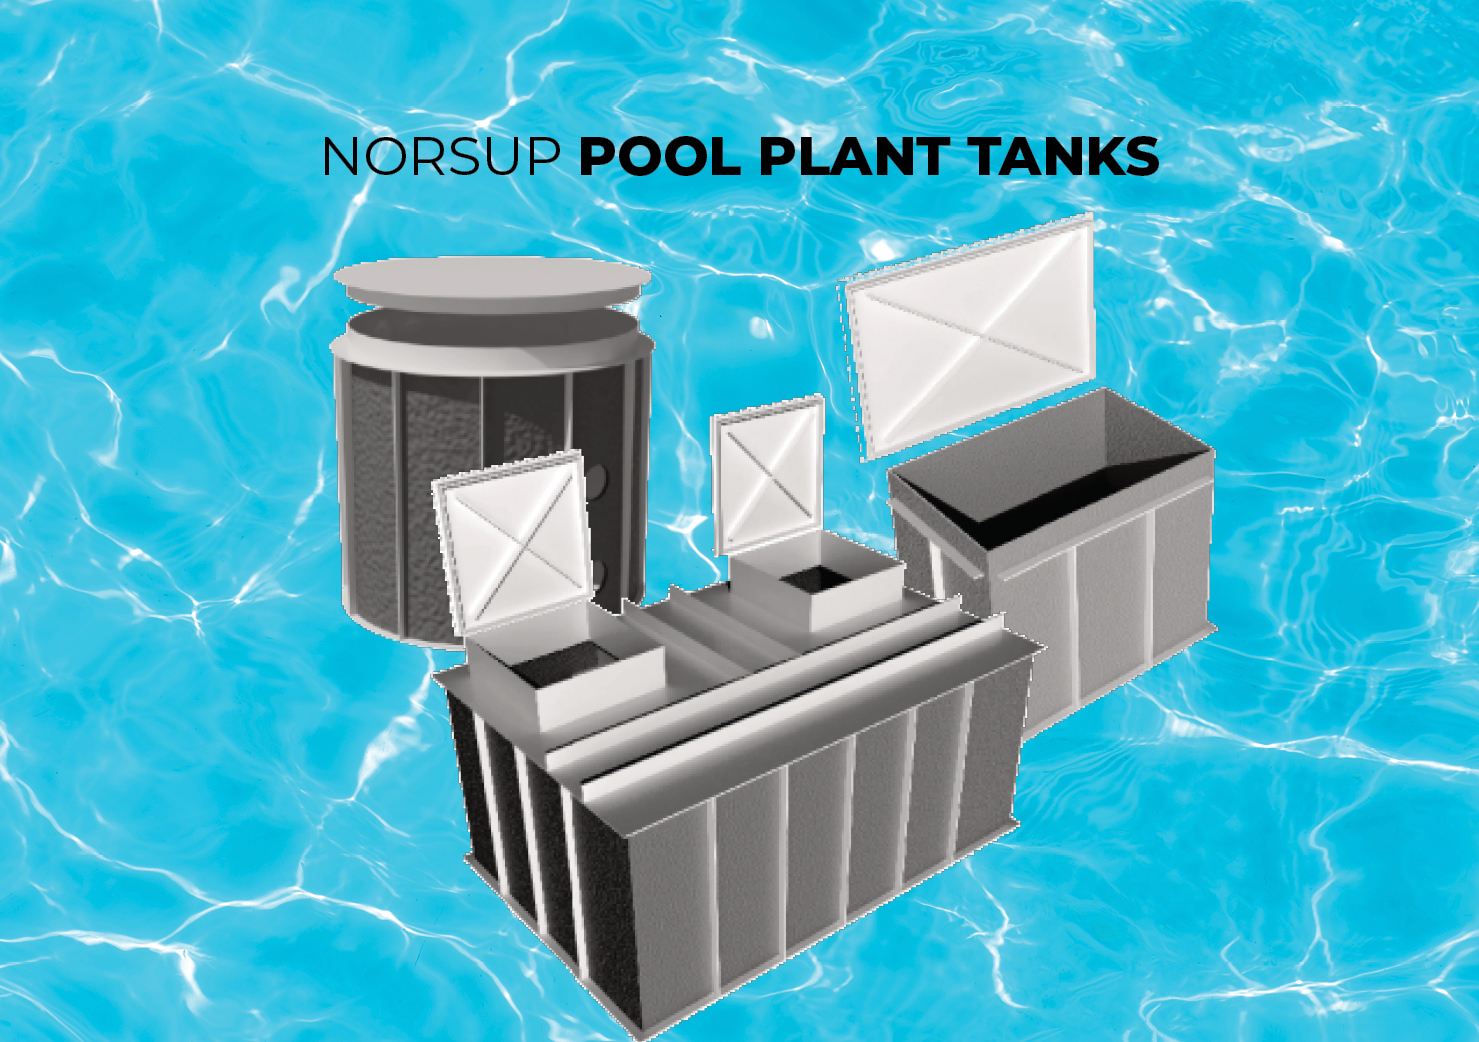 Norsup pool plant tank